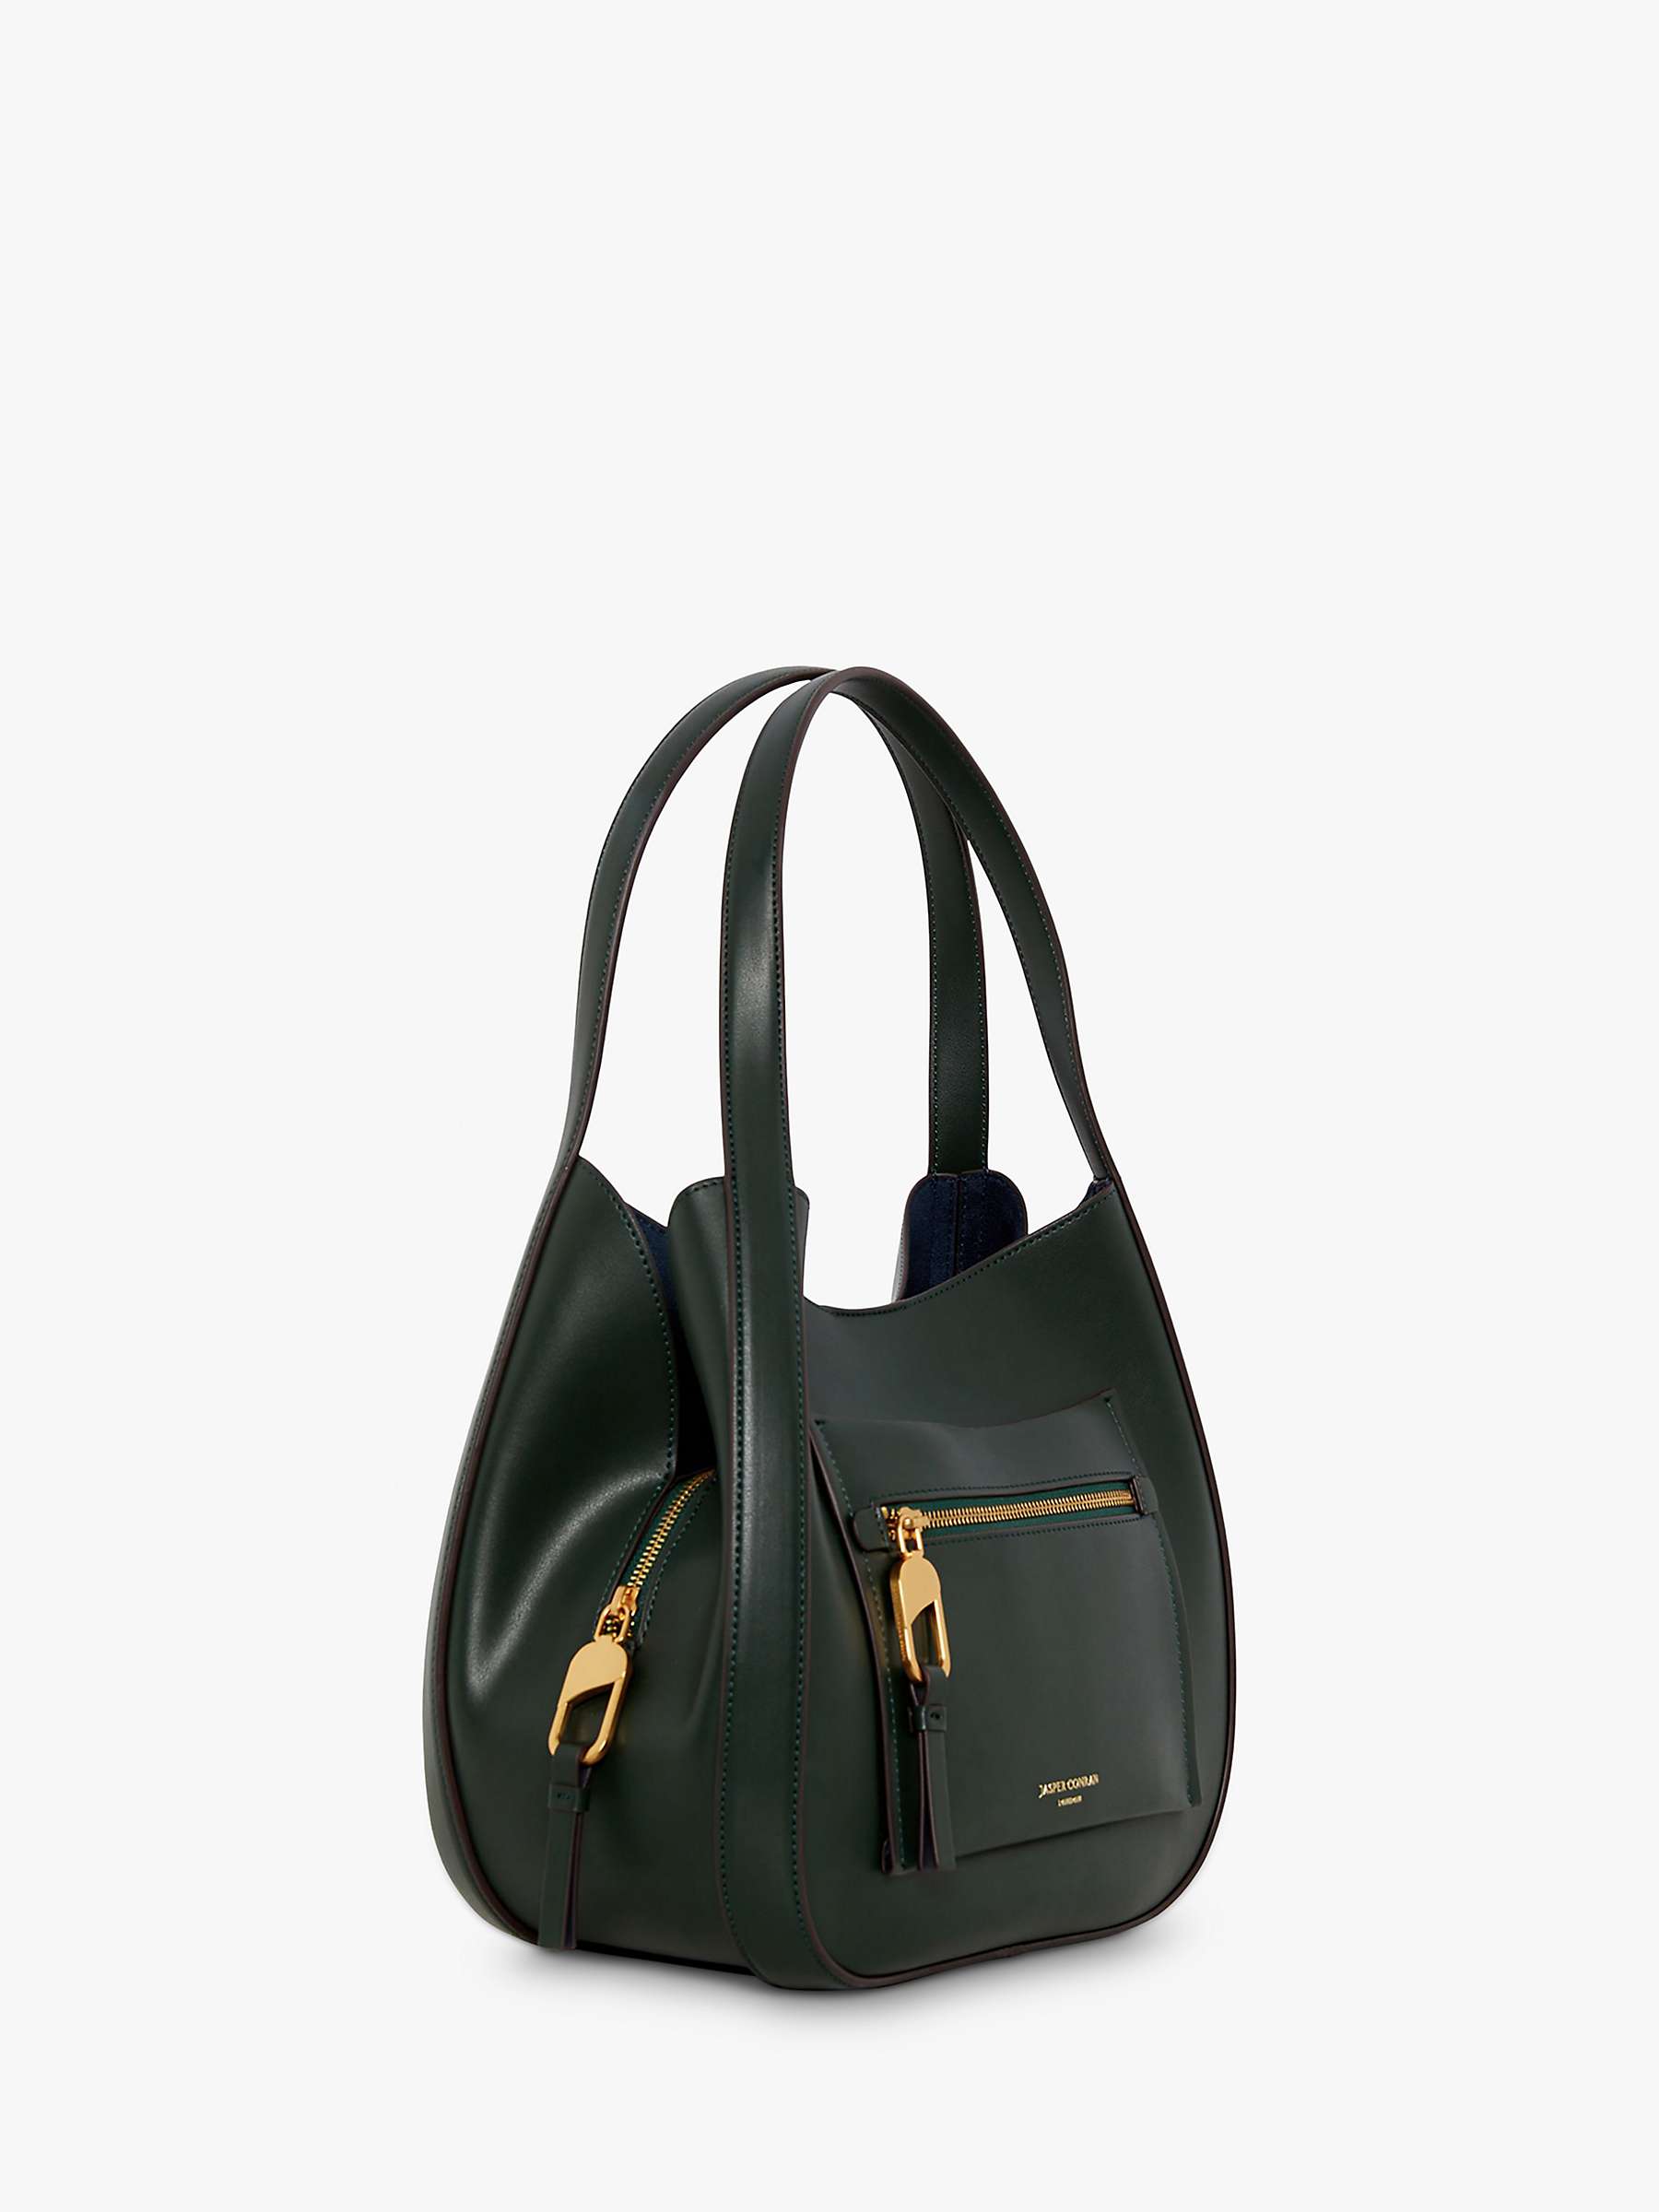 Buy Jasper Conran London Colette Hobo Bag, Dark Green Online at johnlewis.com